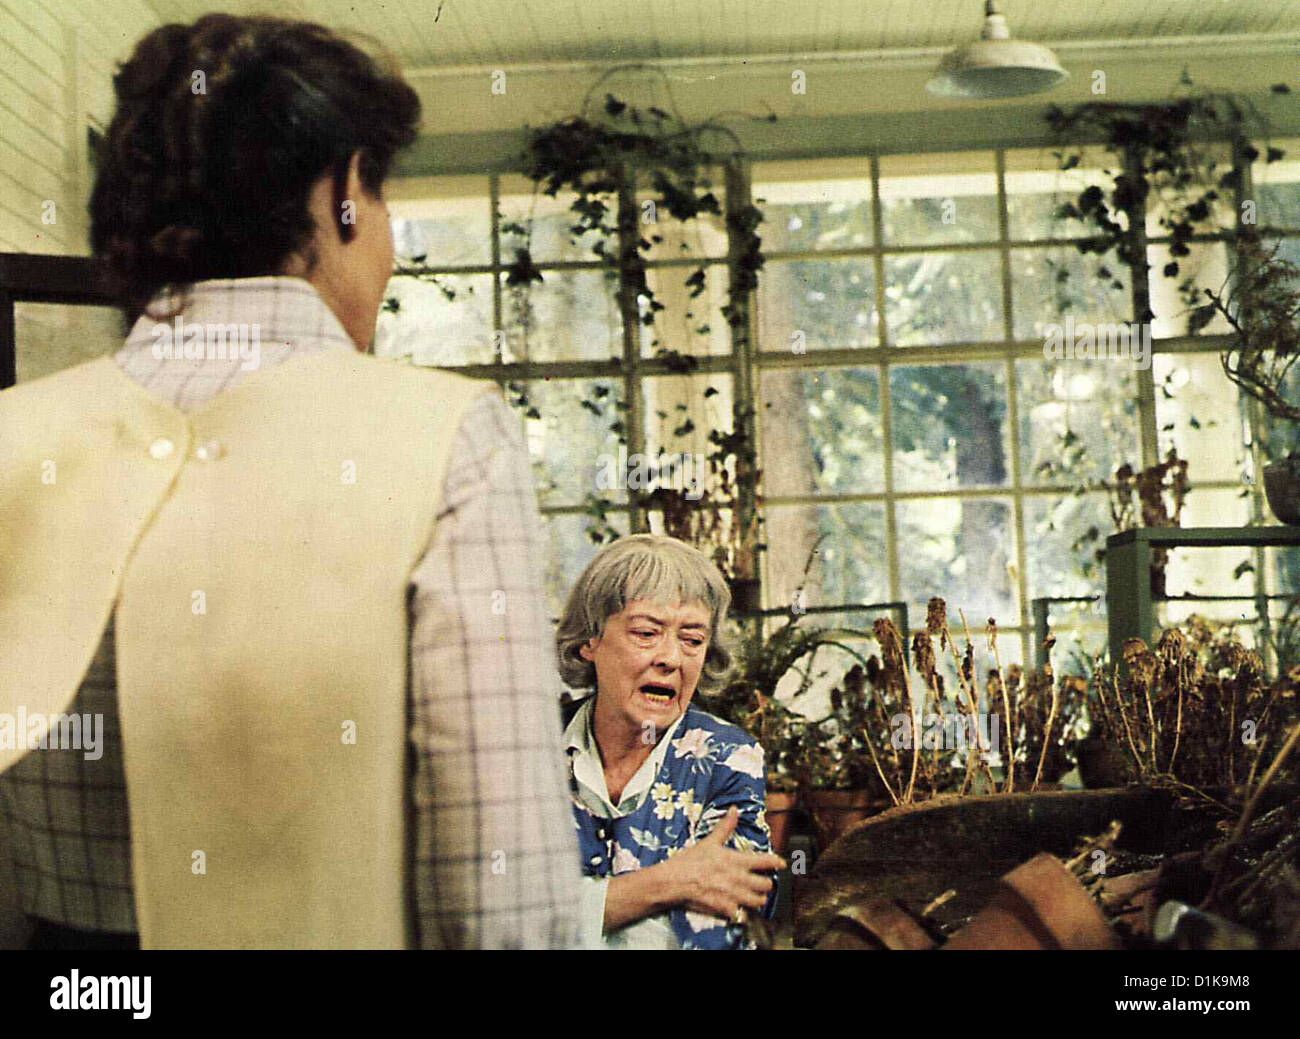 Landhaus der Toten Seelen olocausti Marian (Karen Black) , tante Elizabeth (Bette Davis) *** Caption locale *** 1976 -- Foto Stock